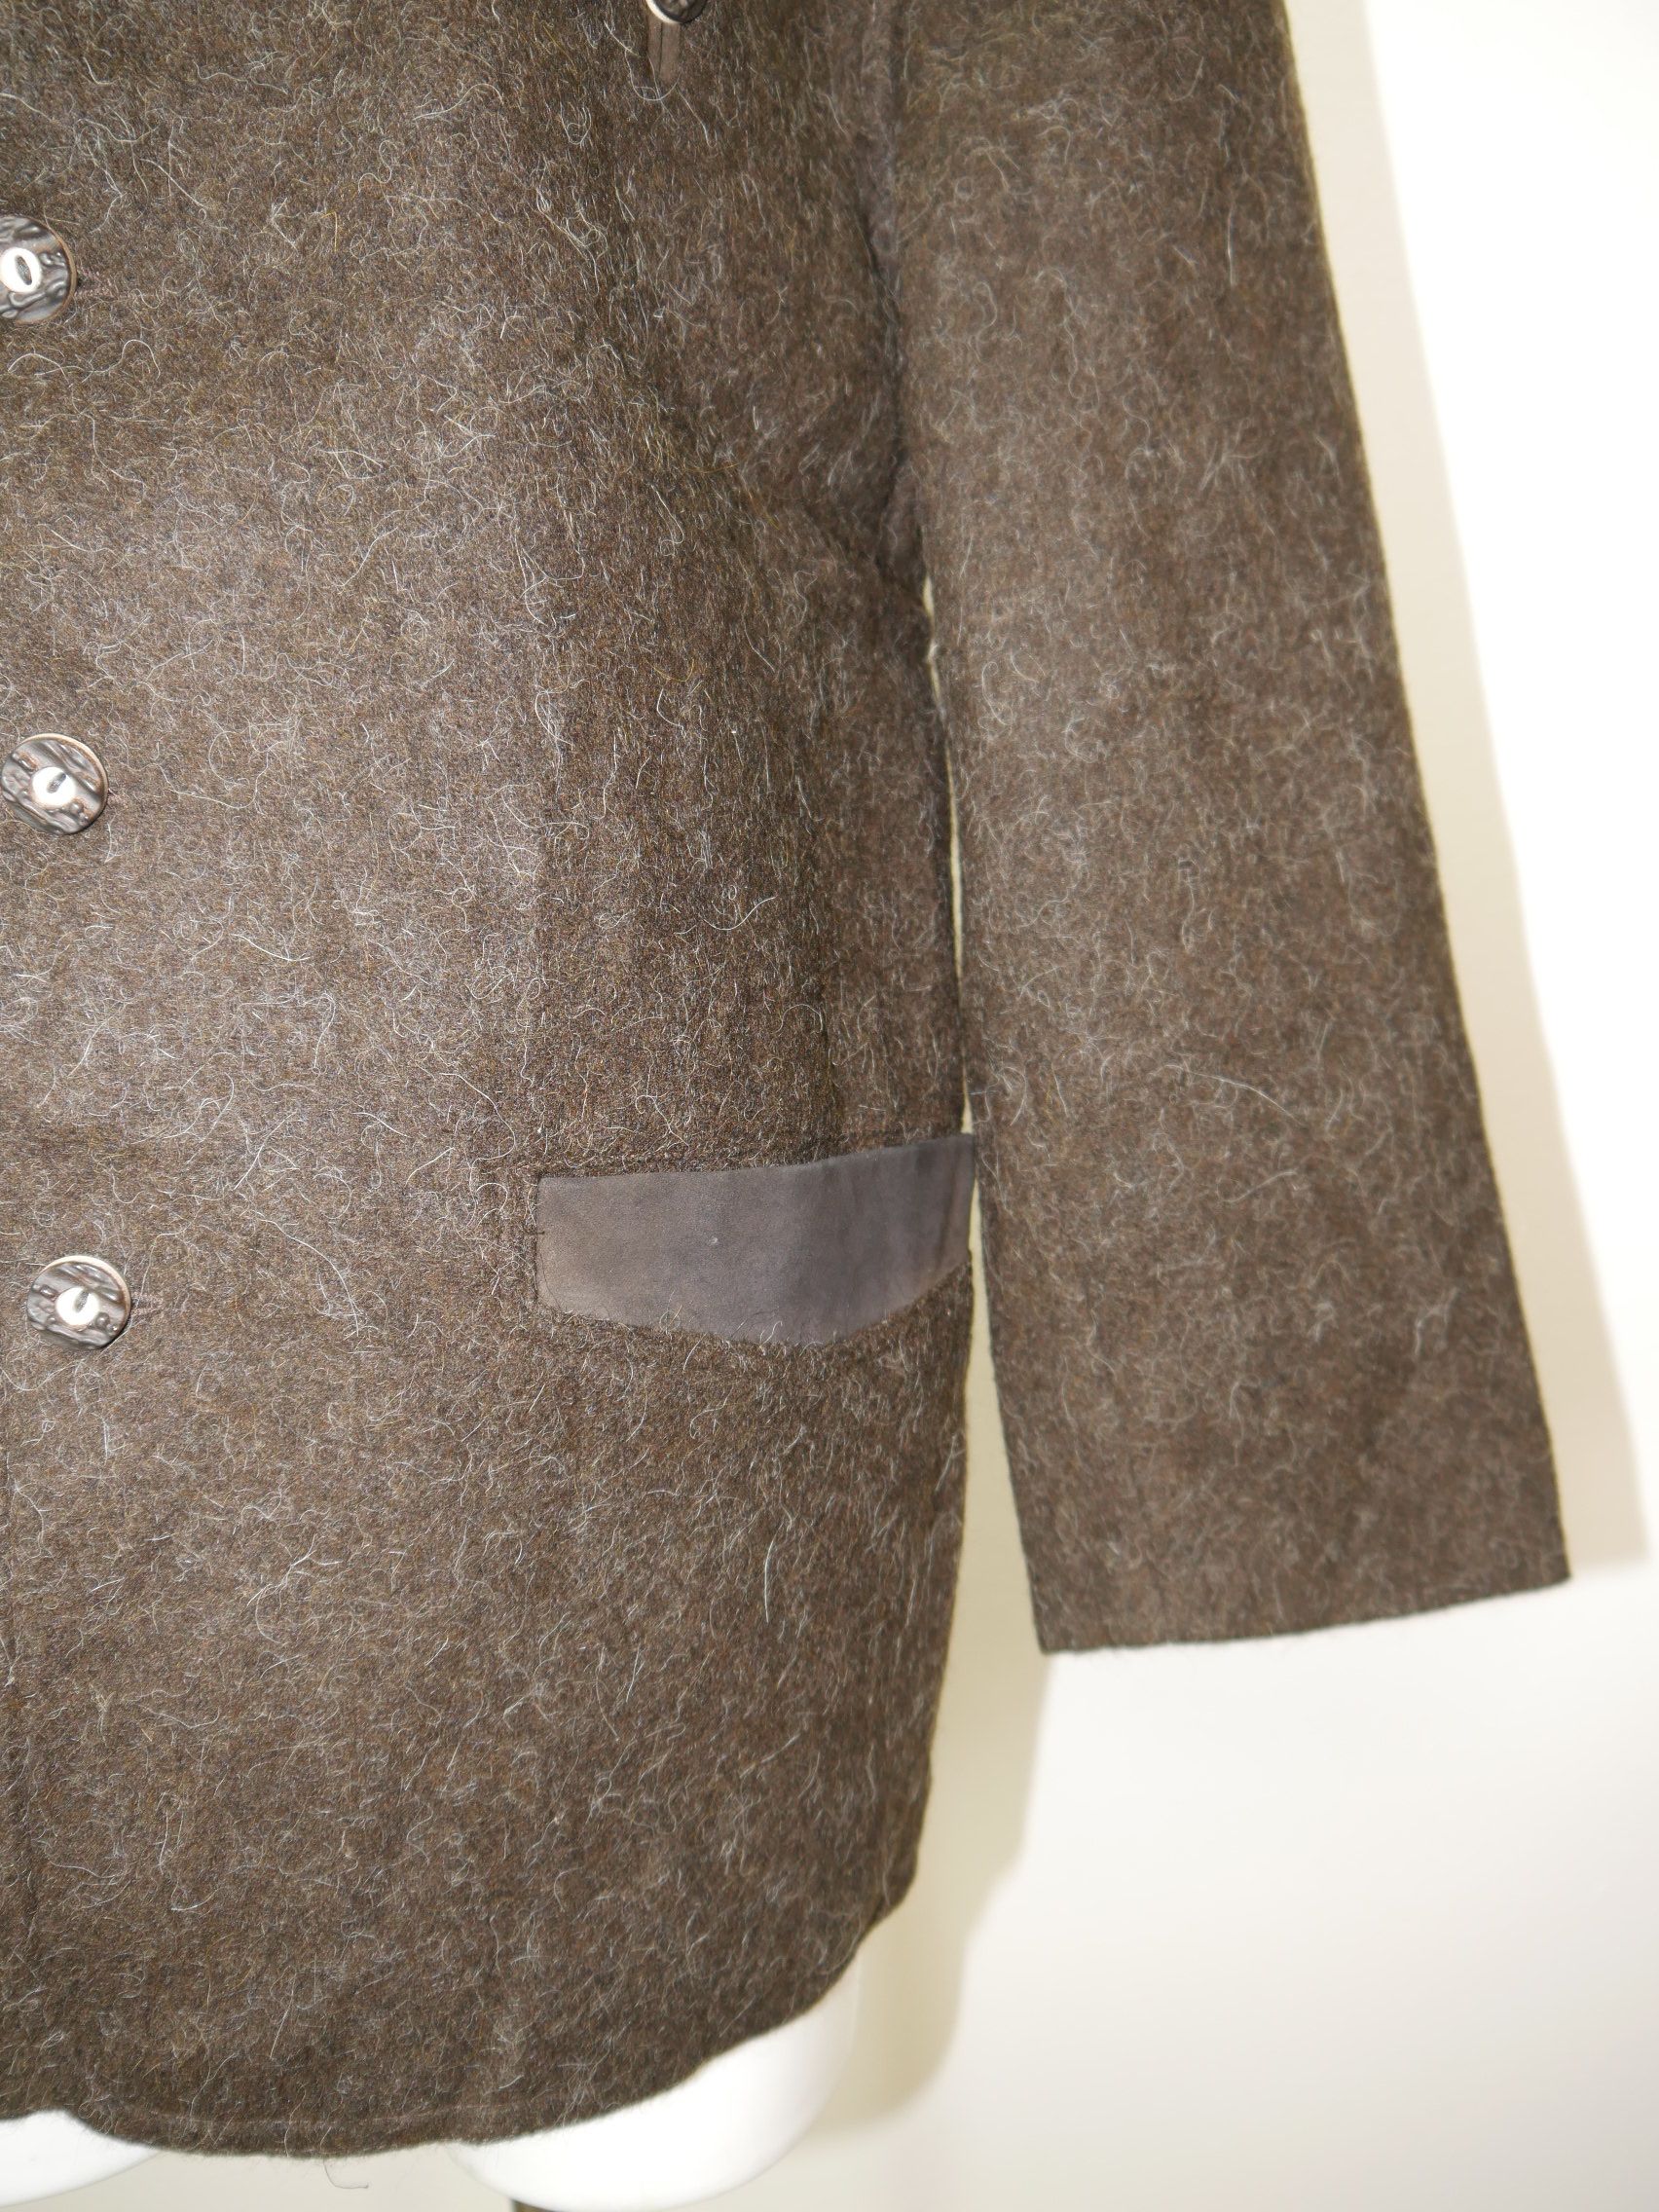 Alphorn jacket as good as new Alpaca leather trim wonderful traditional ...